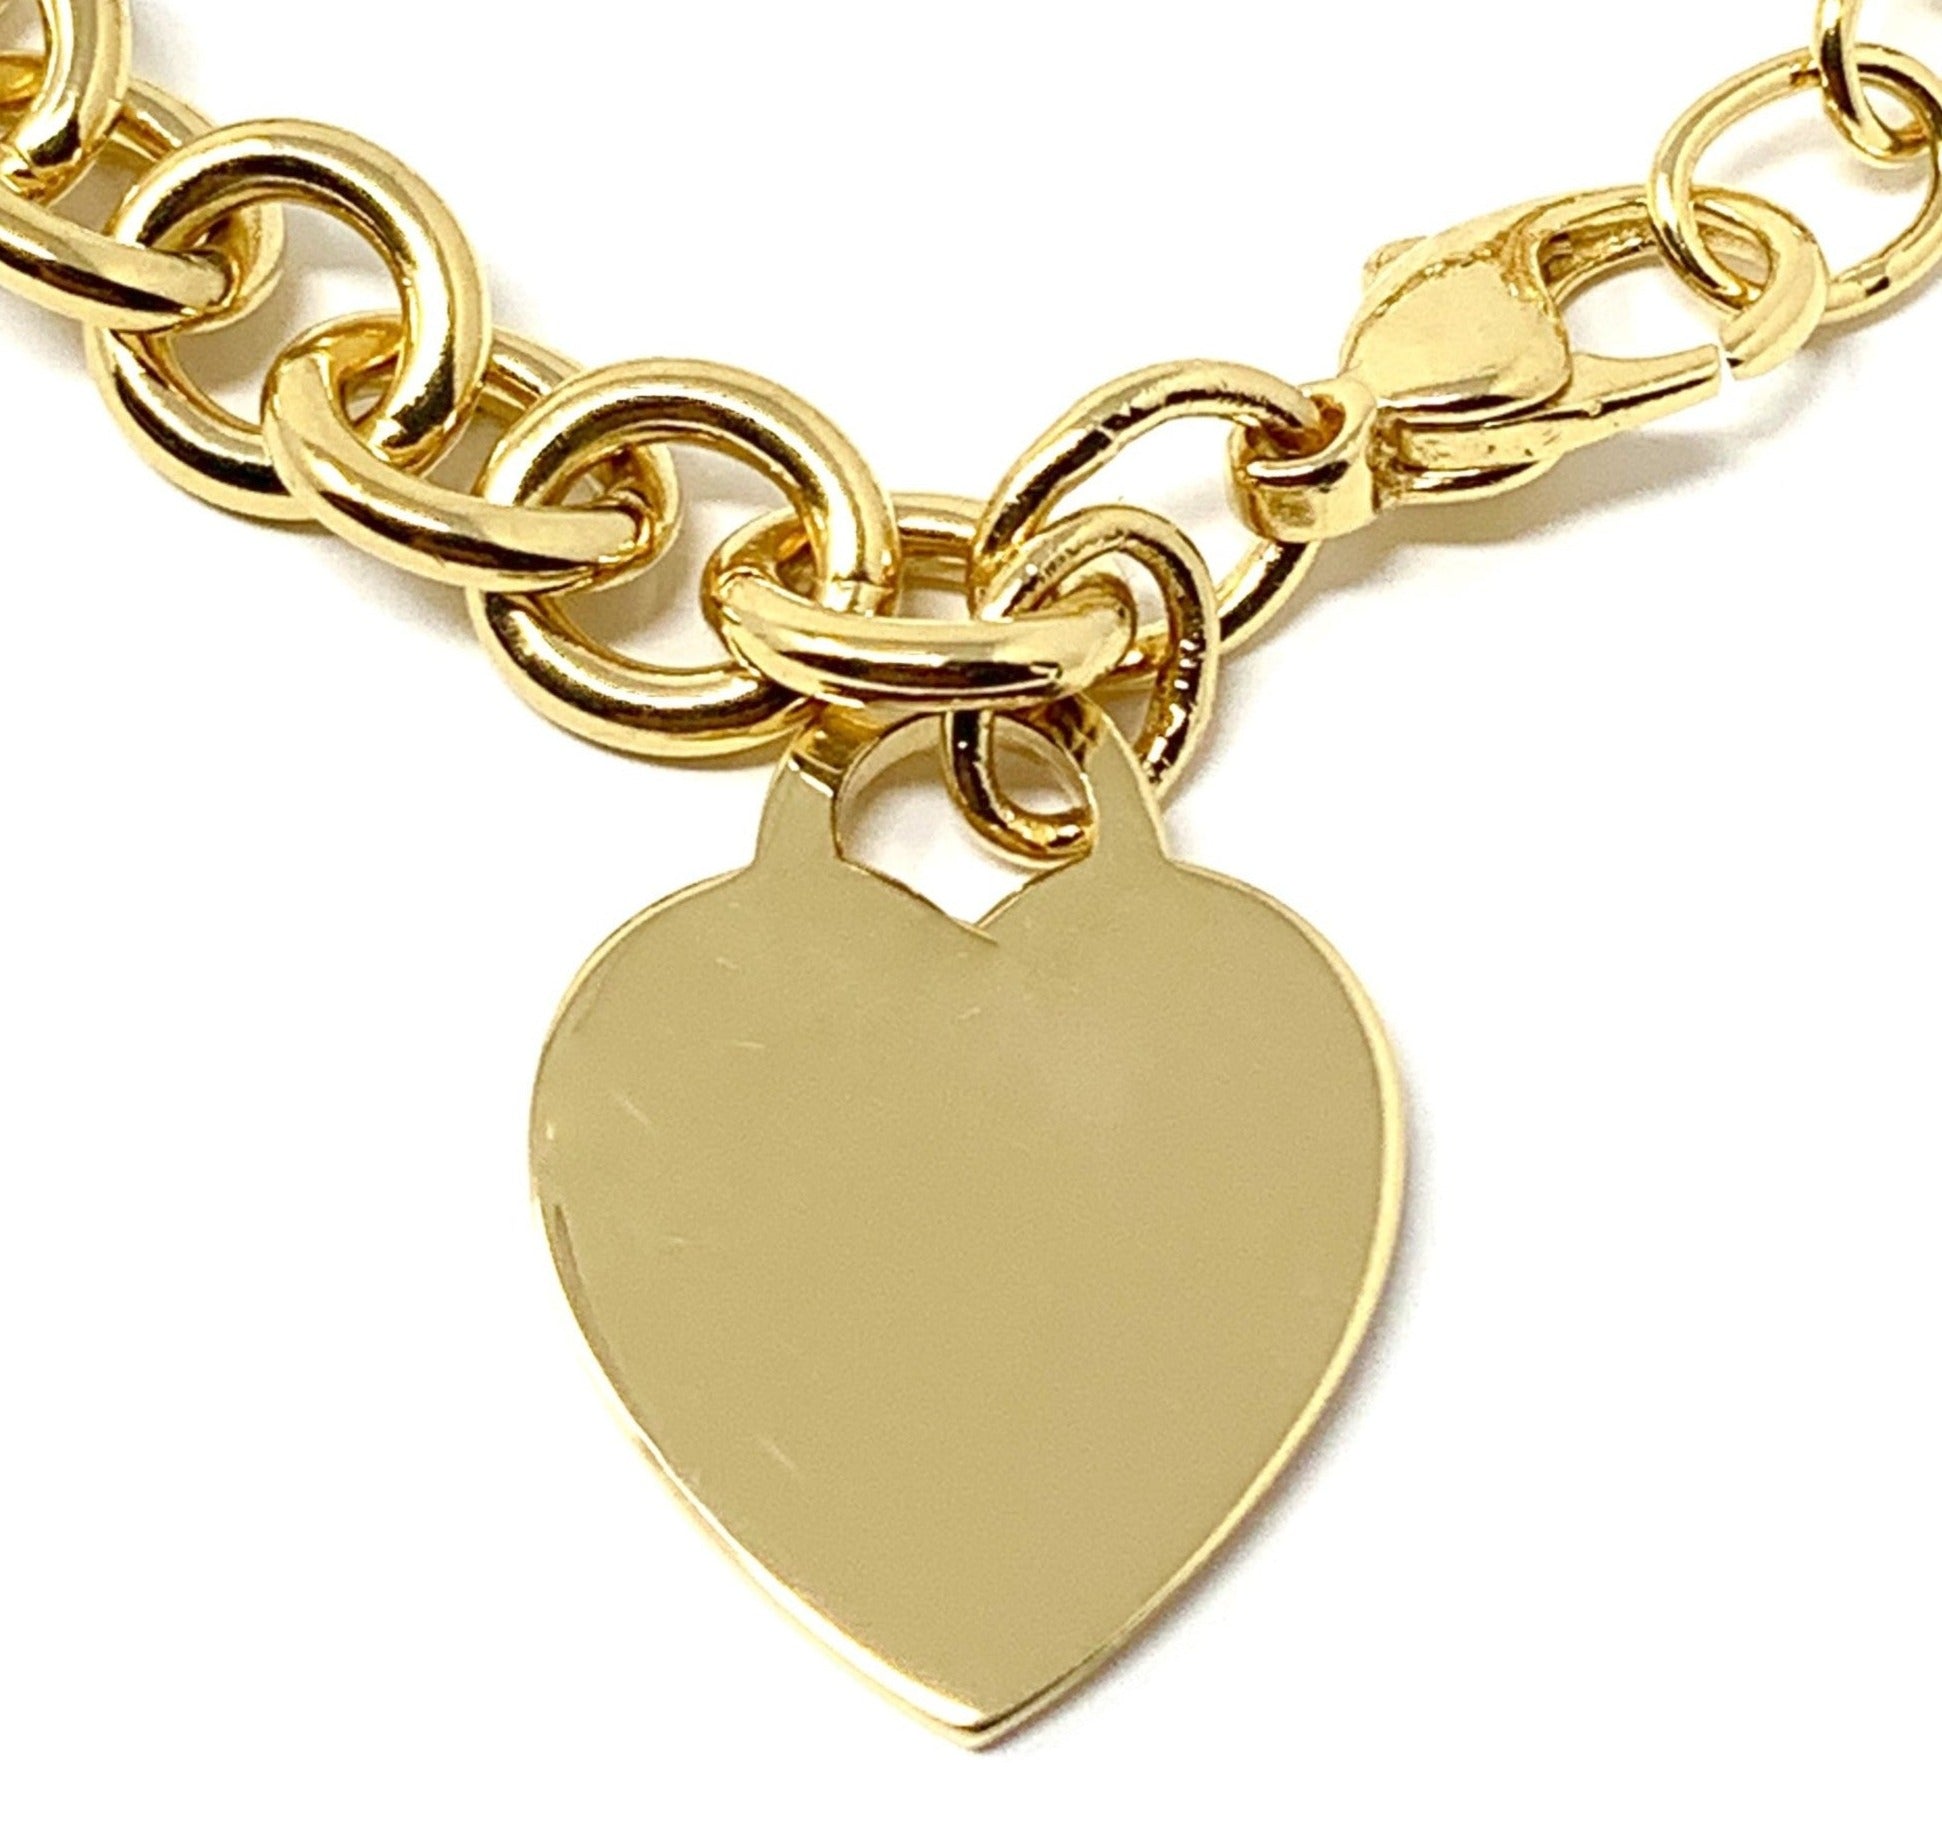 Tiffany & Co. Charm Bracelet in 18K Yellow Gold